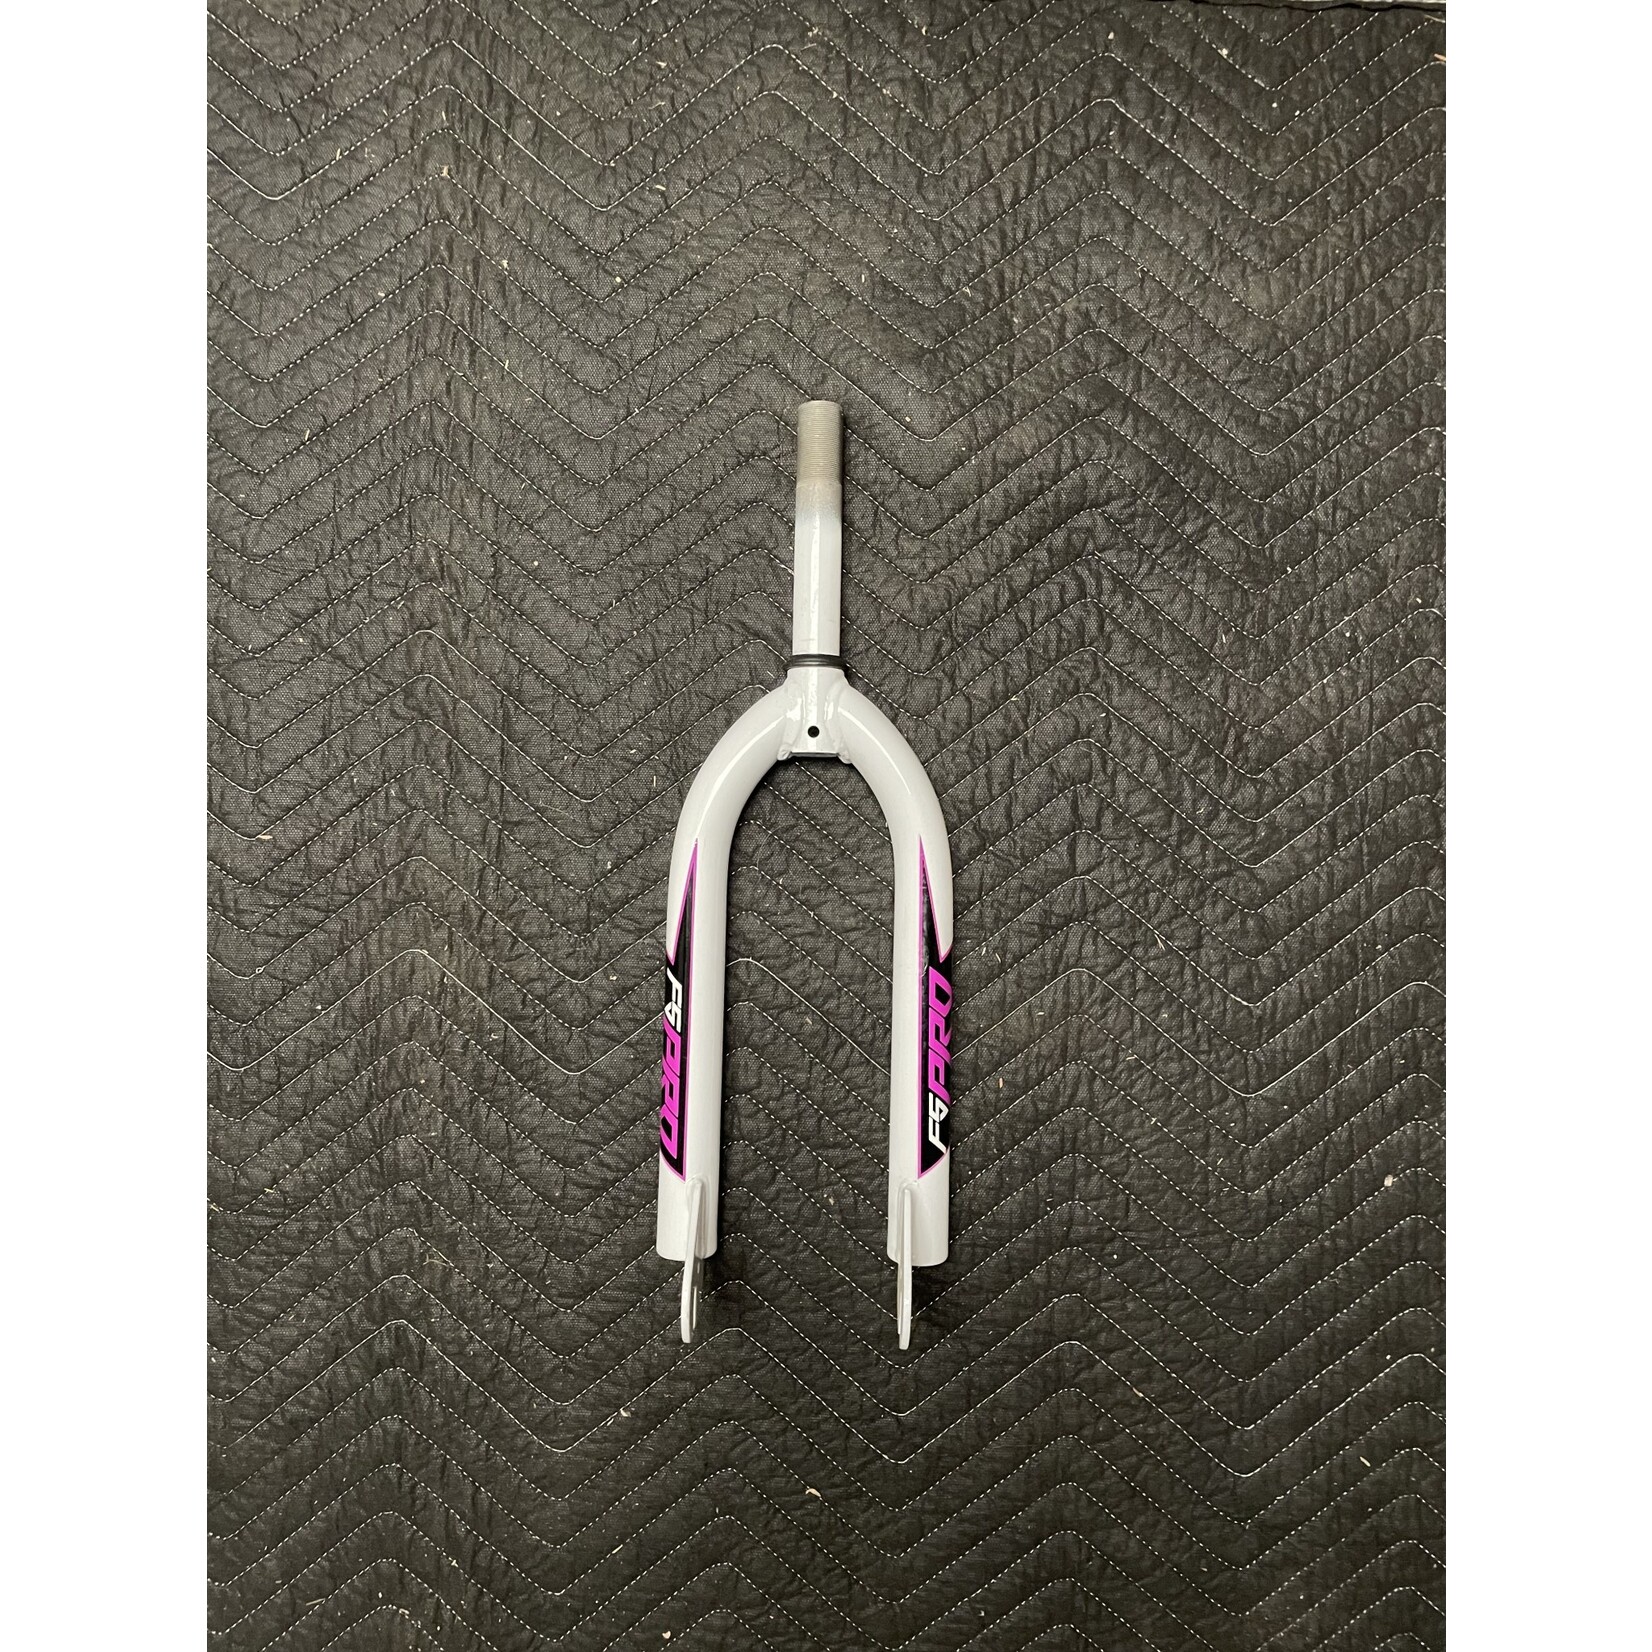 FSPro 1” x 5 1/2” Threaded 20" Bicycle Fork (White & Pinkish Purple)